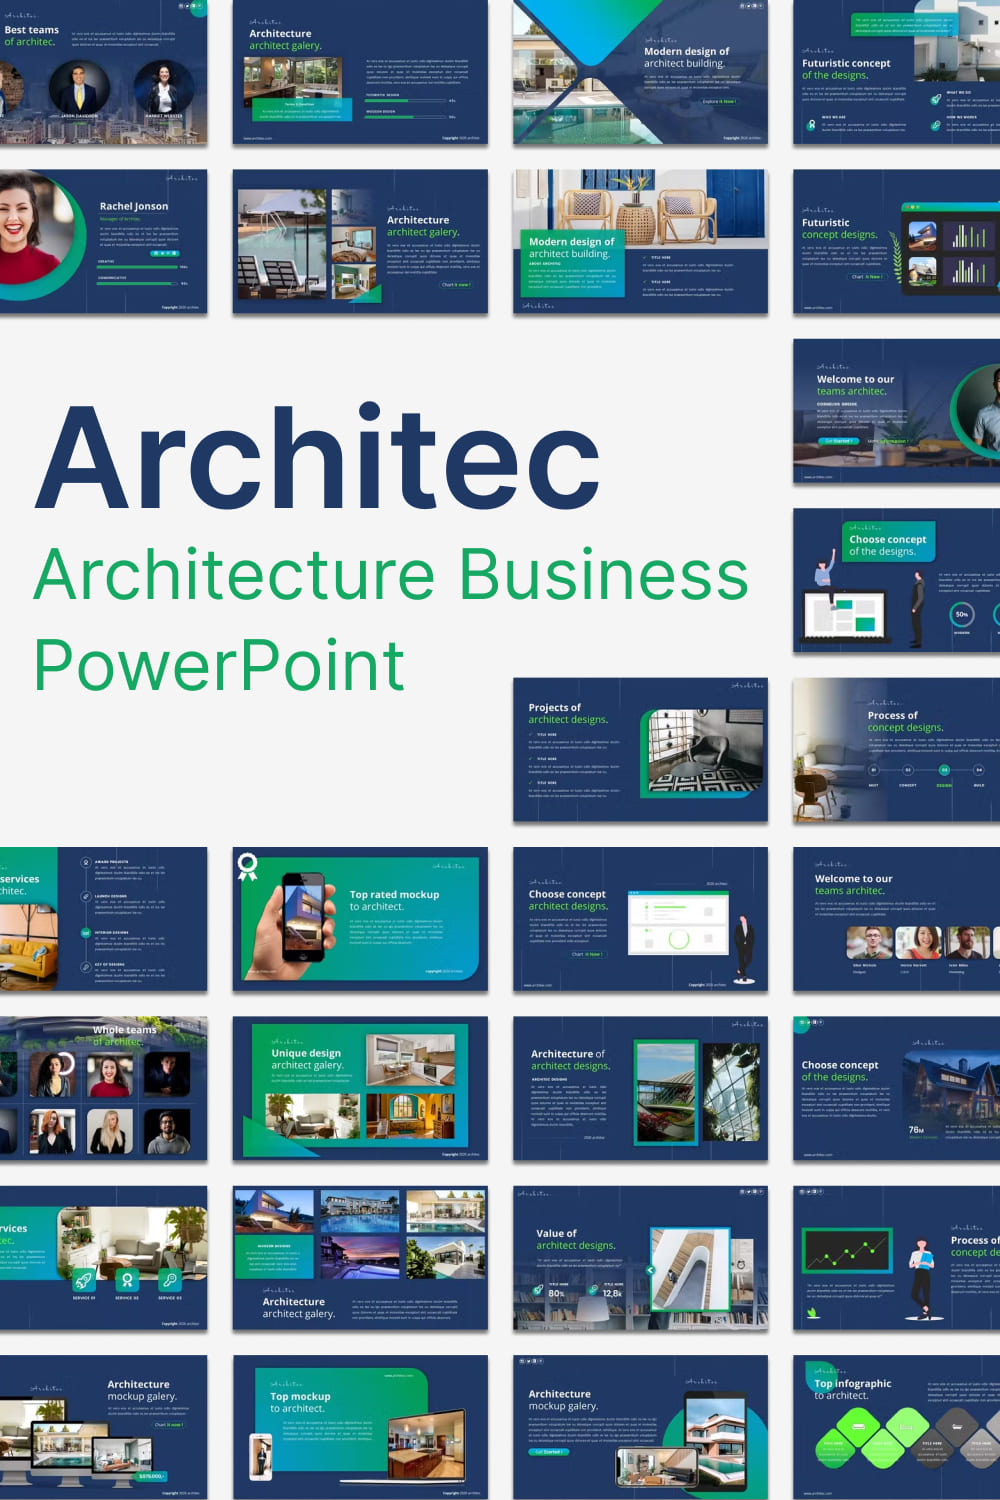 Architec architecture business powerpoint - pinterest image preview.